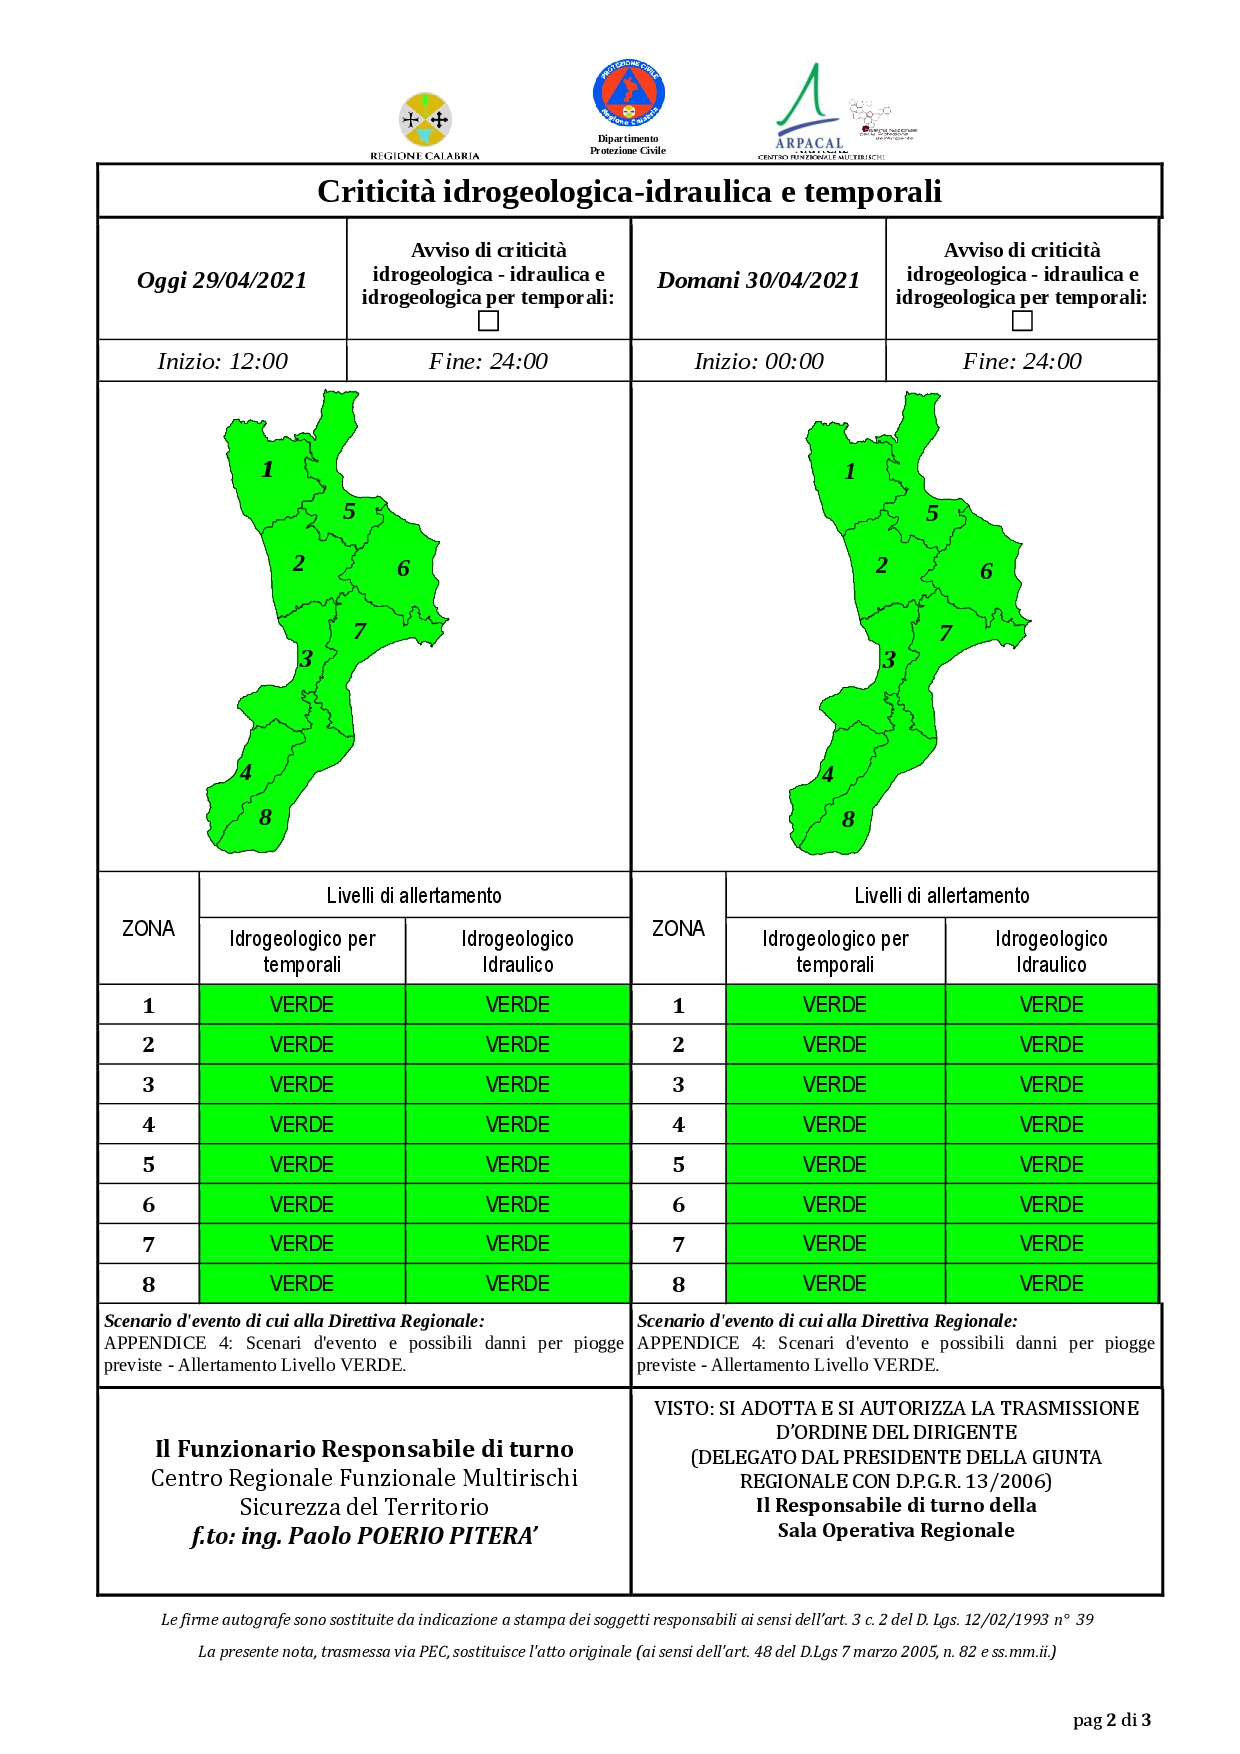 Criticità idrogeologica-idraulica e temporali in Calabria 29-04-2021